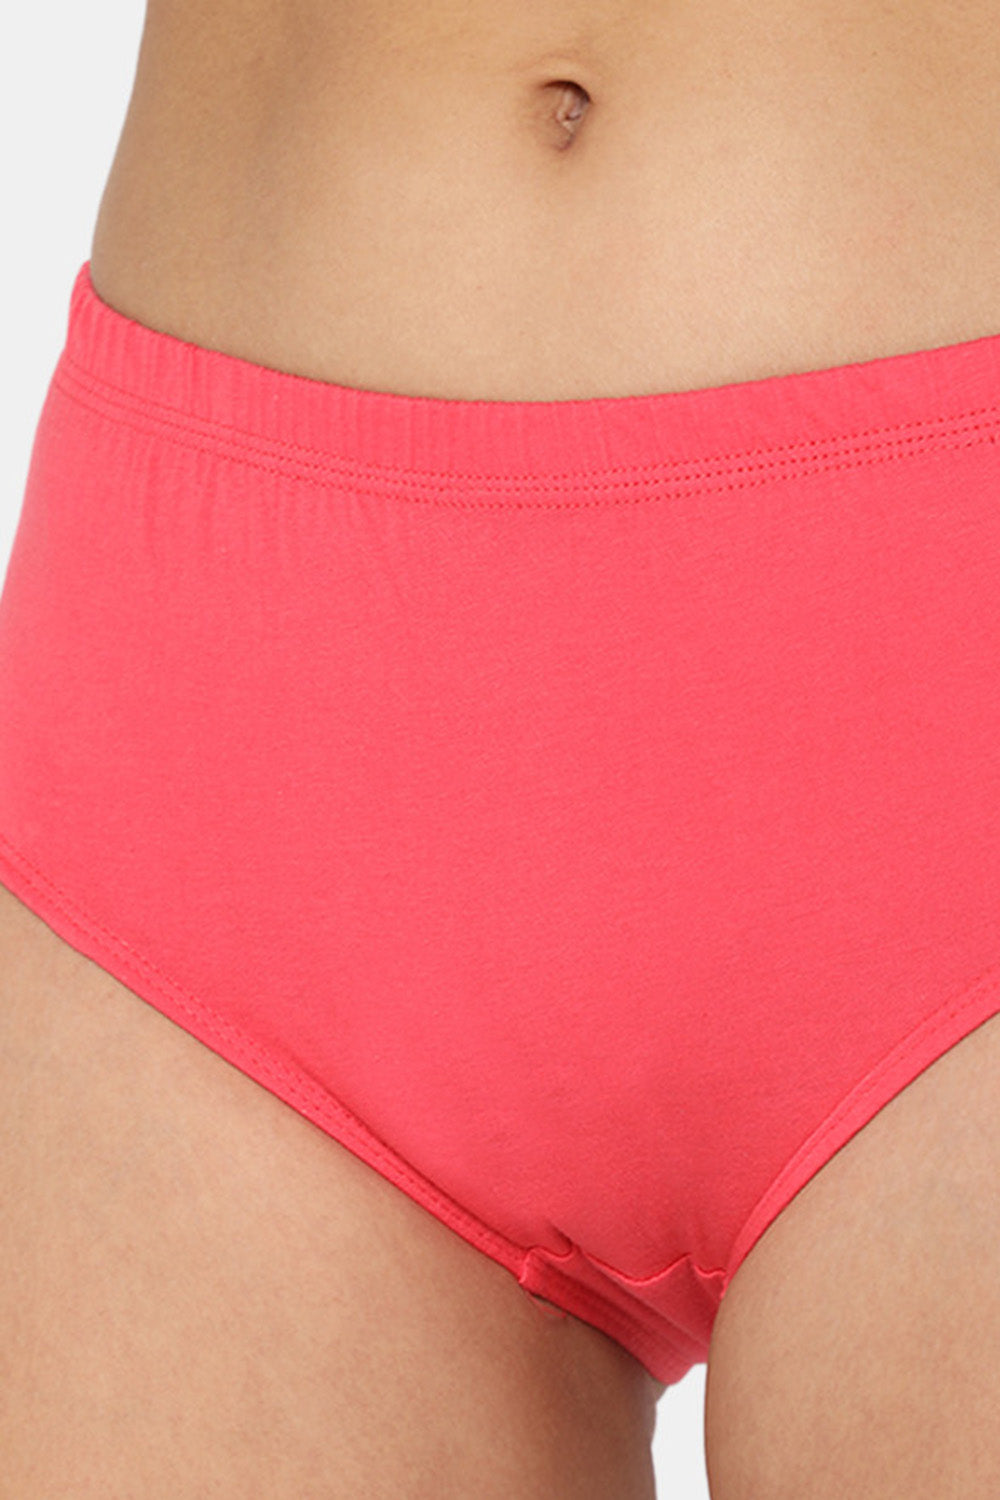 Intimacy Classic Dark Plain Panty - Inner Elastic -Pack of 3 - Cotton - Spandex